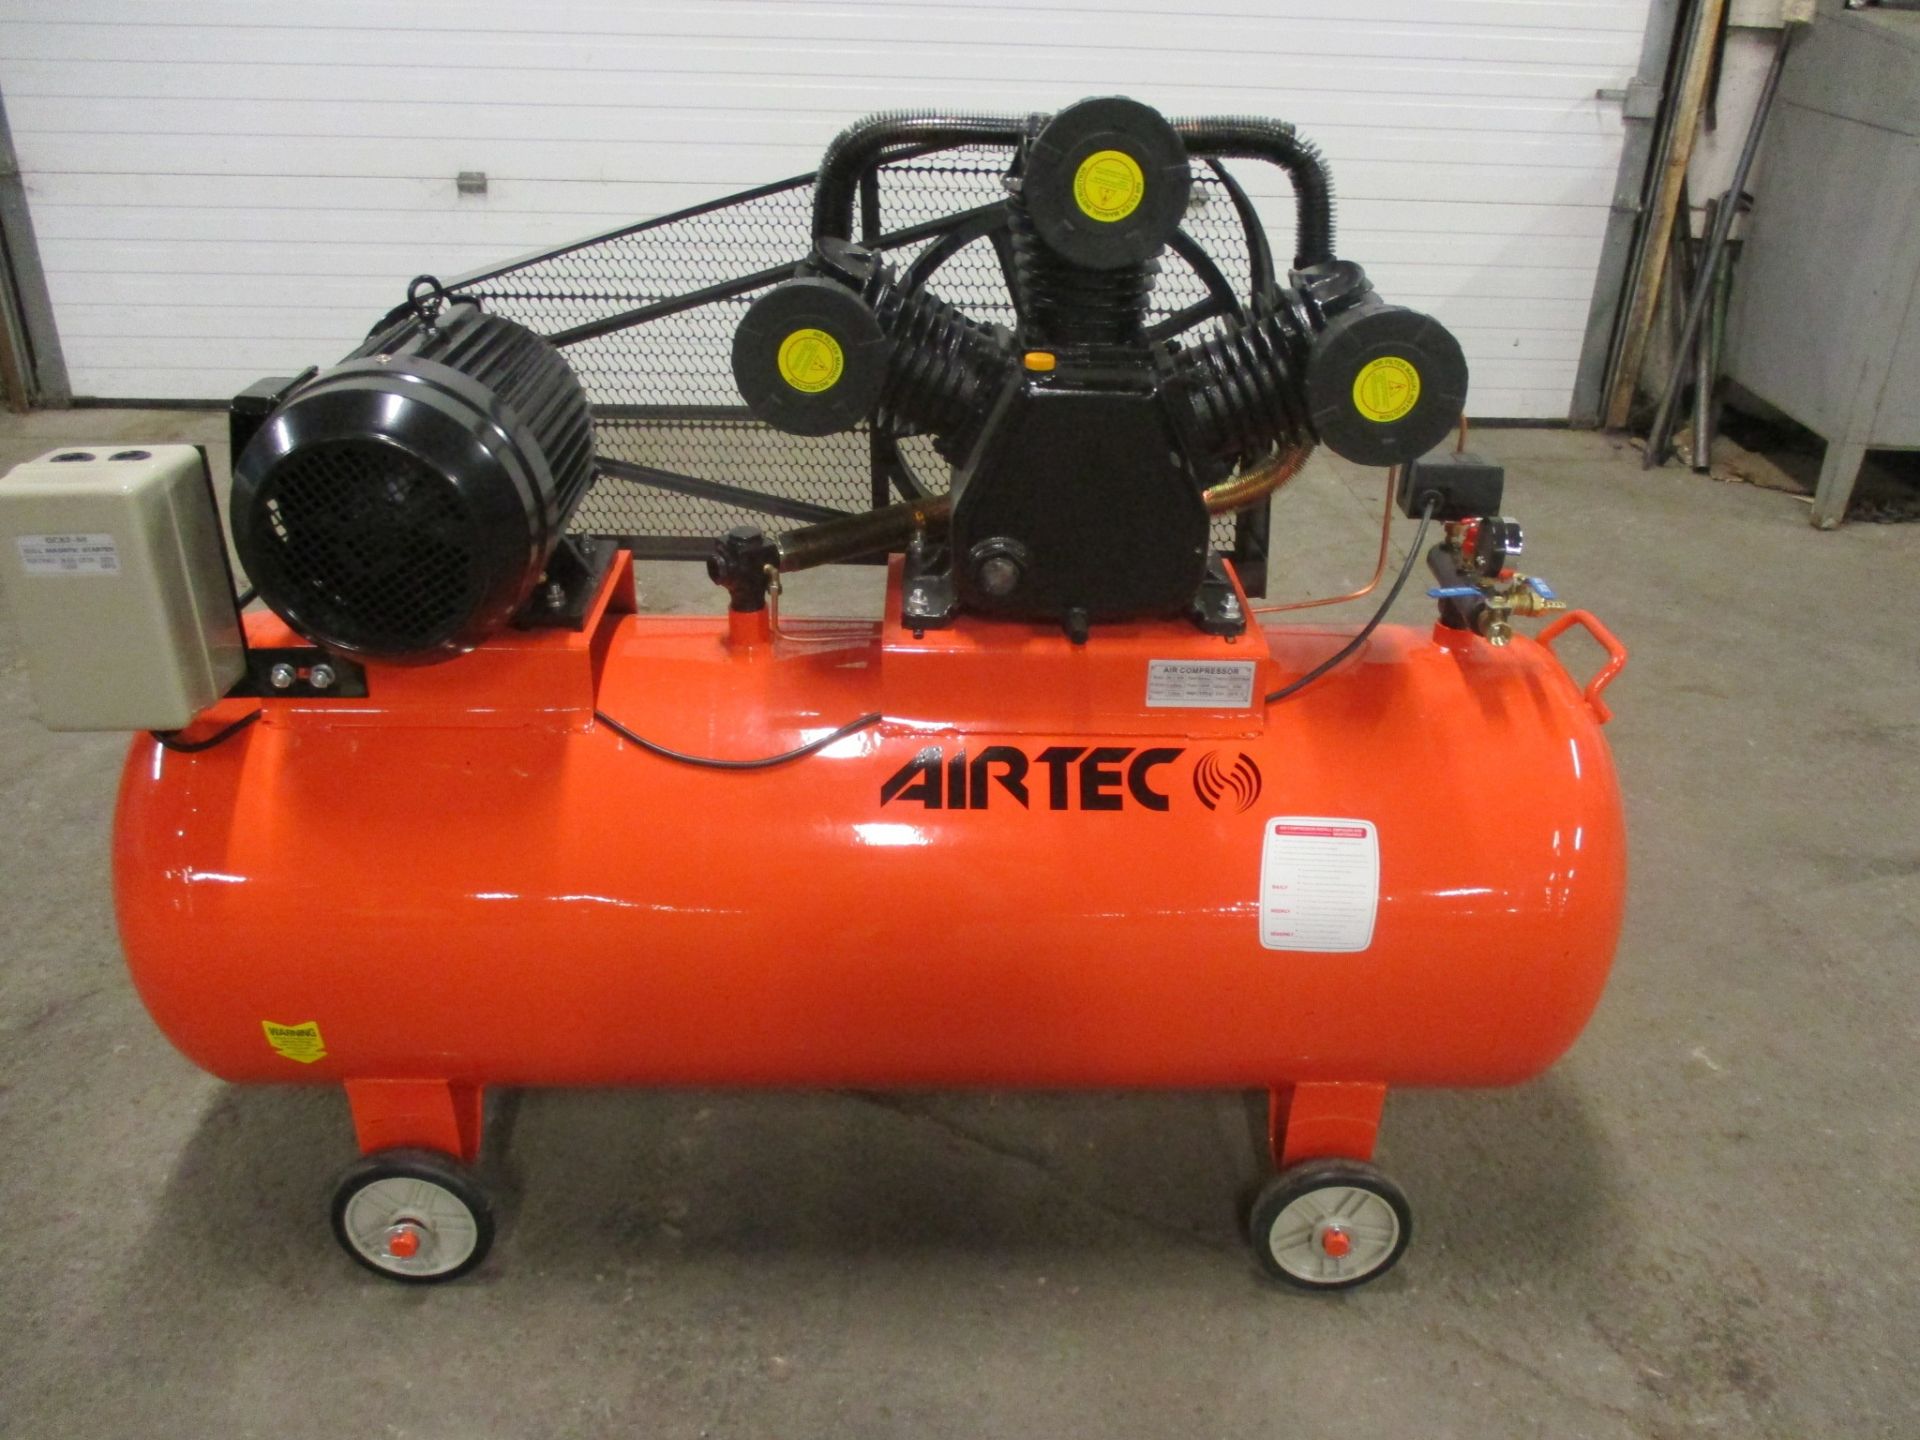 ****Airtec 10HP Air Compressor - MINT UNUSED COMPRESSOR with 80 Gallon horizontal compressed air